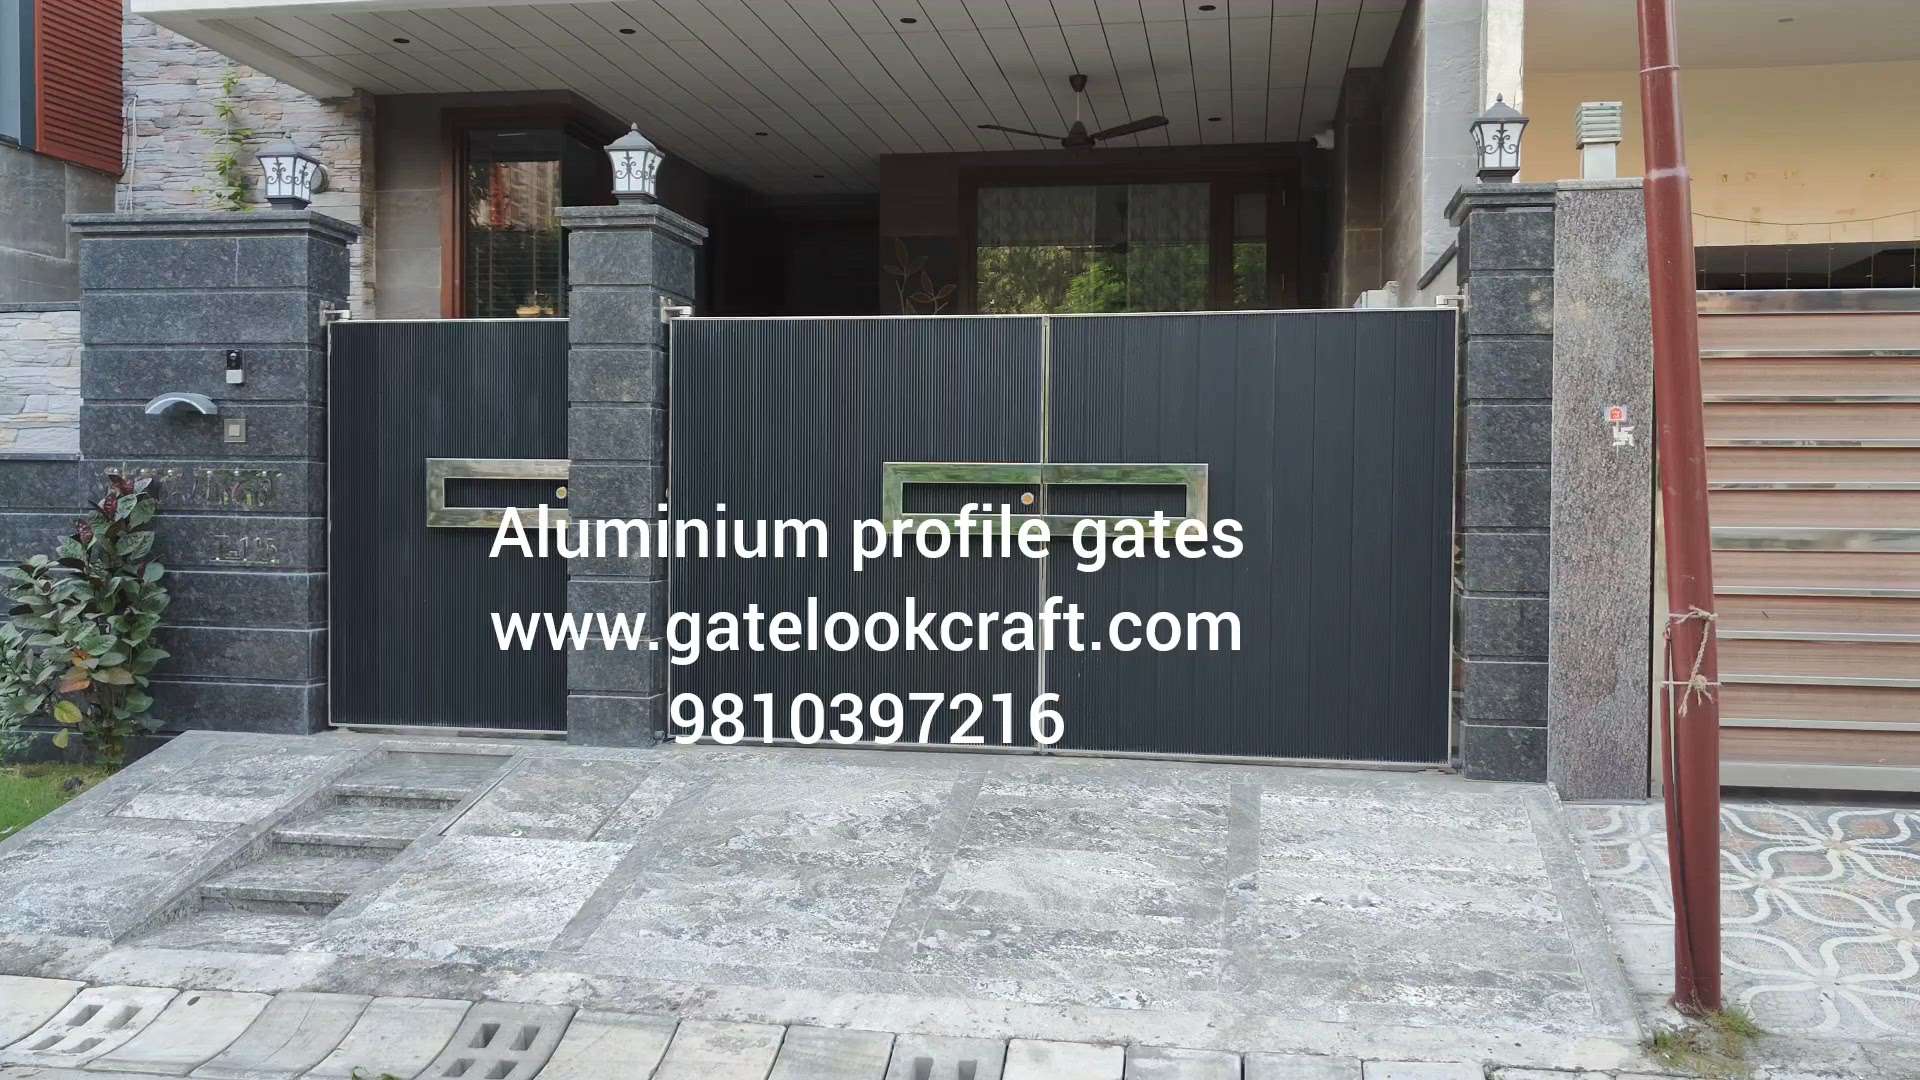 Aluminium profile gates by Hibza sterling interiors pvt ltd #gatelookcraft #aluminiumprofilegates #modular #fancygates #maingate